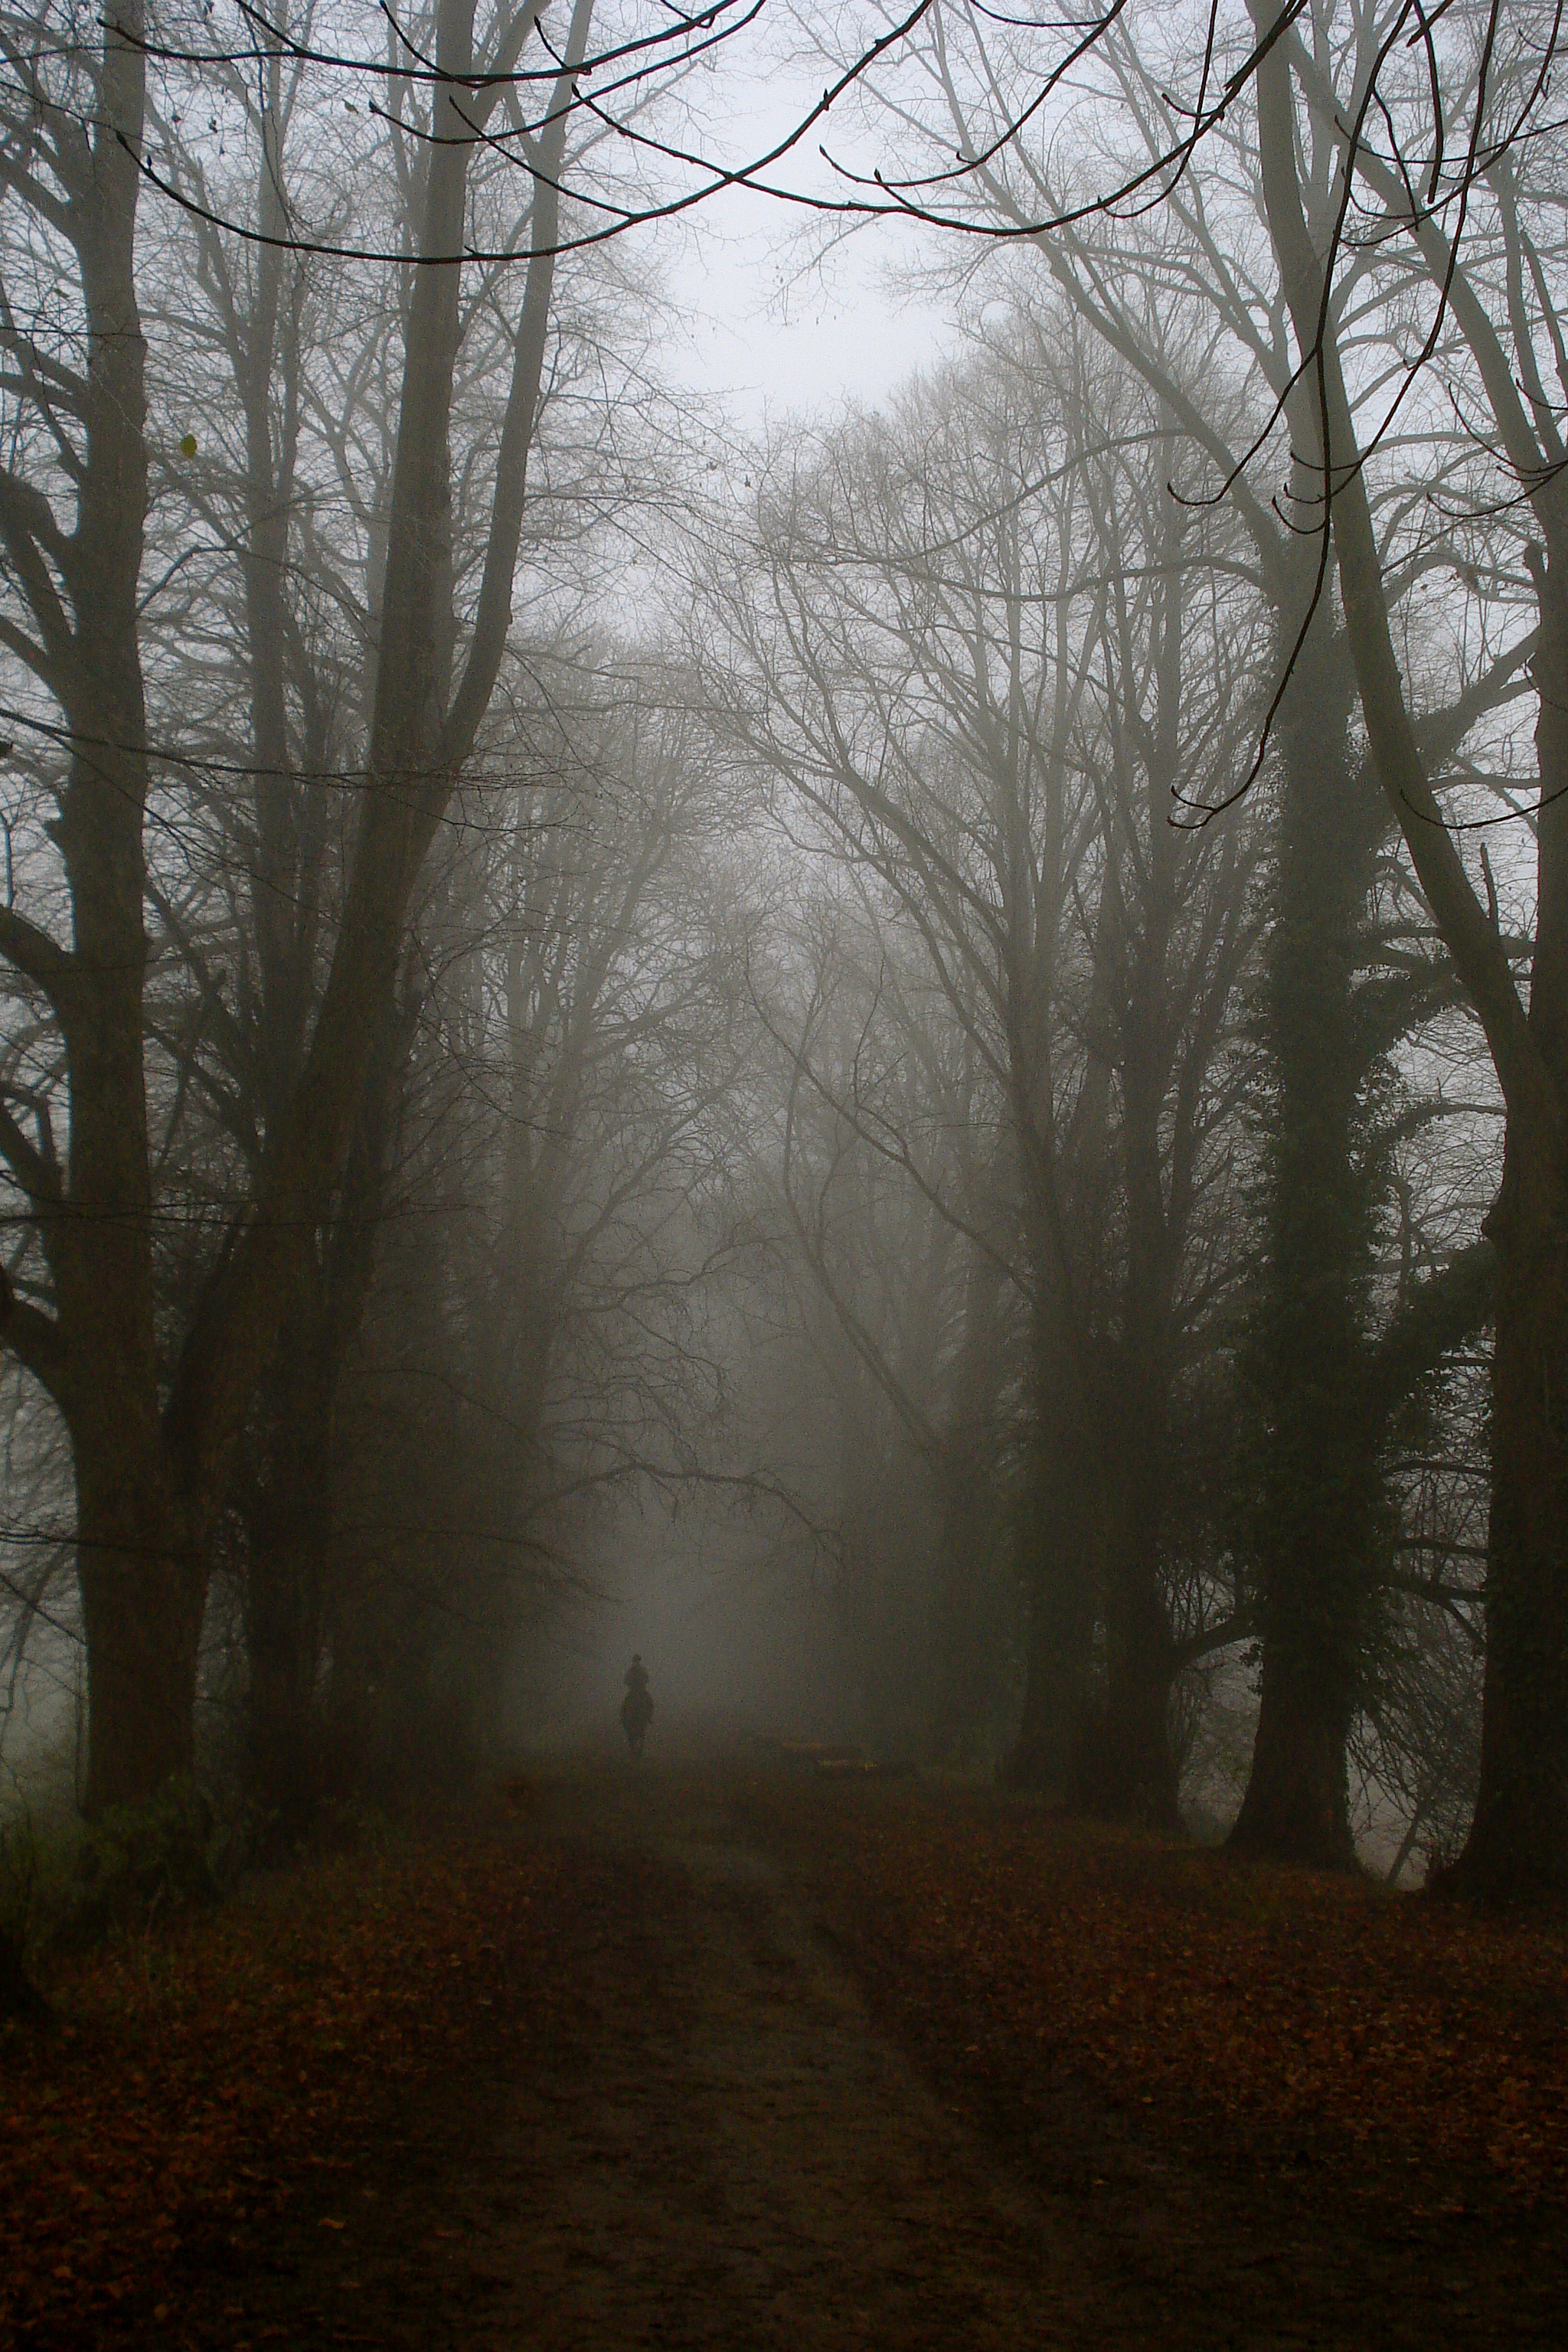 Ghost rider in the mist